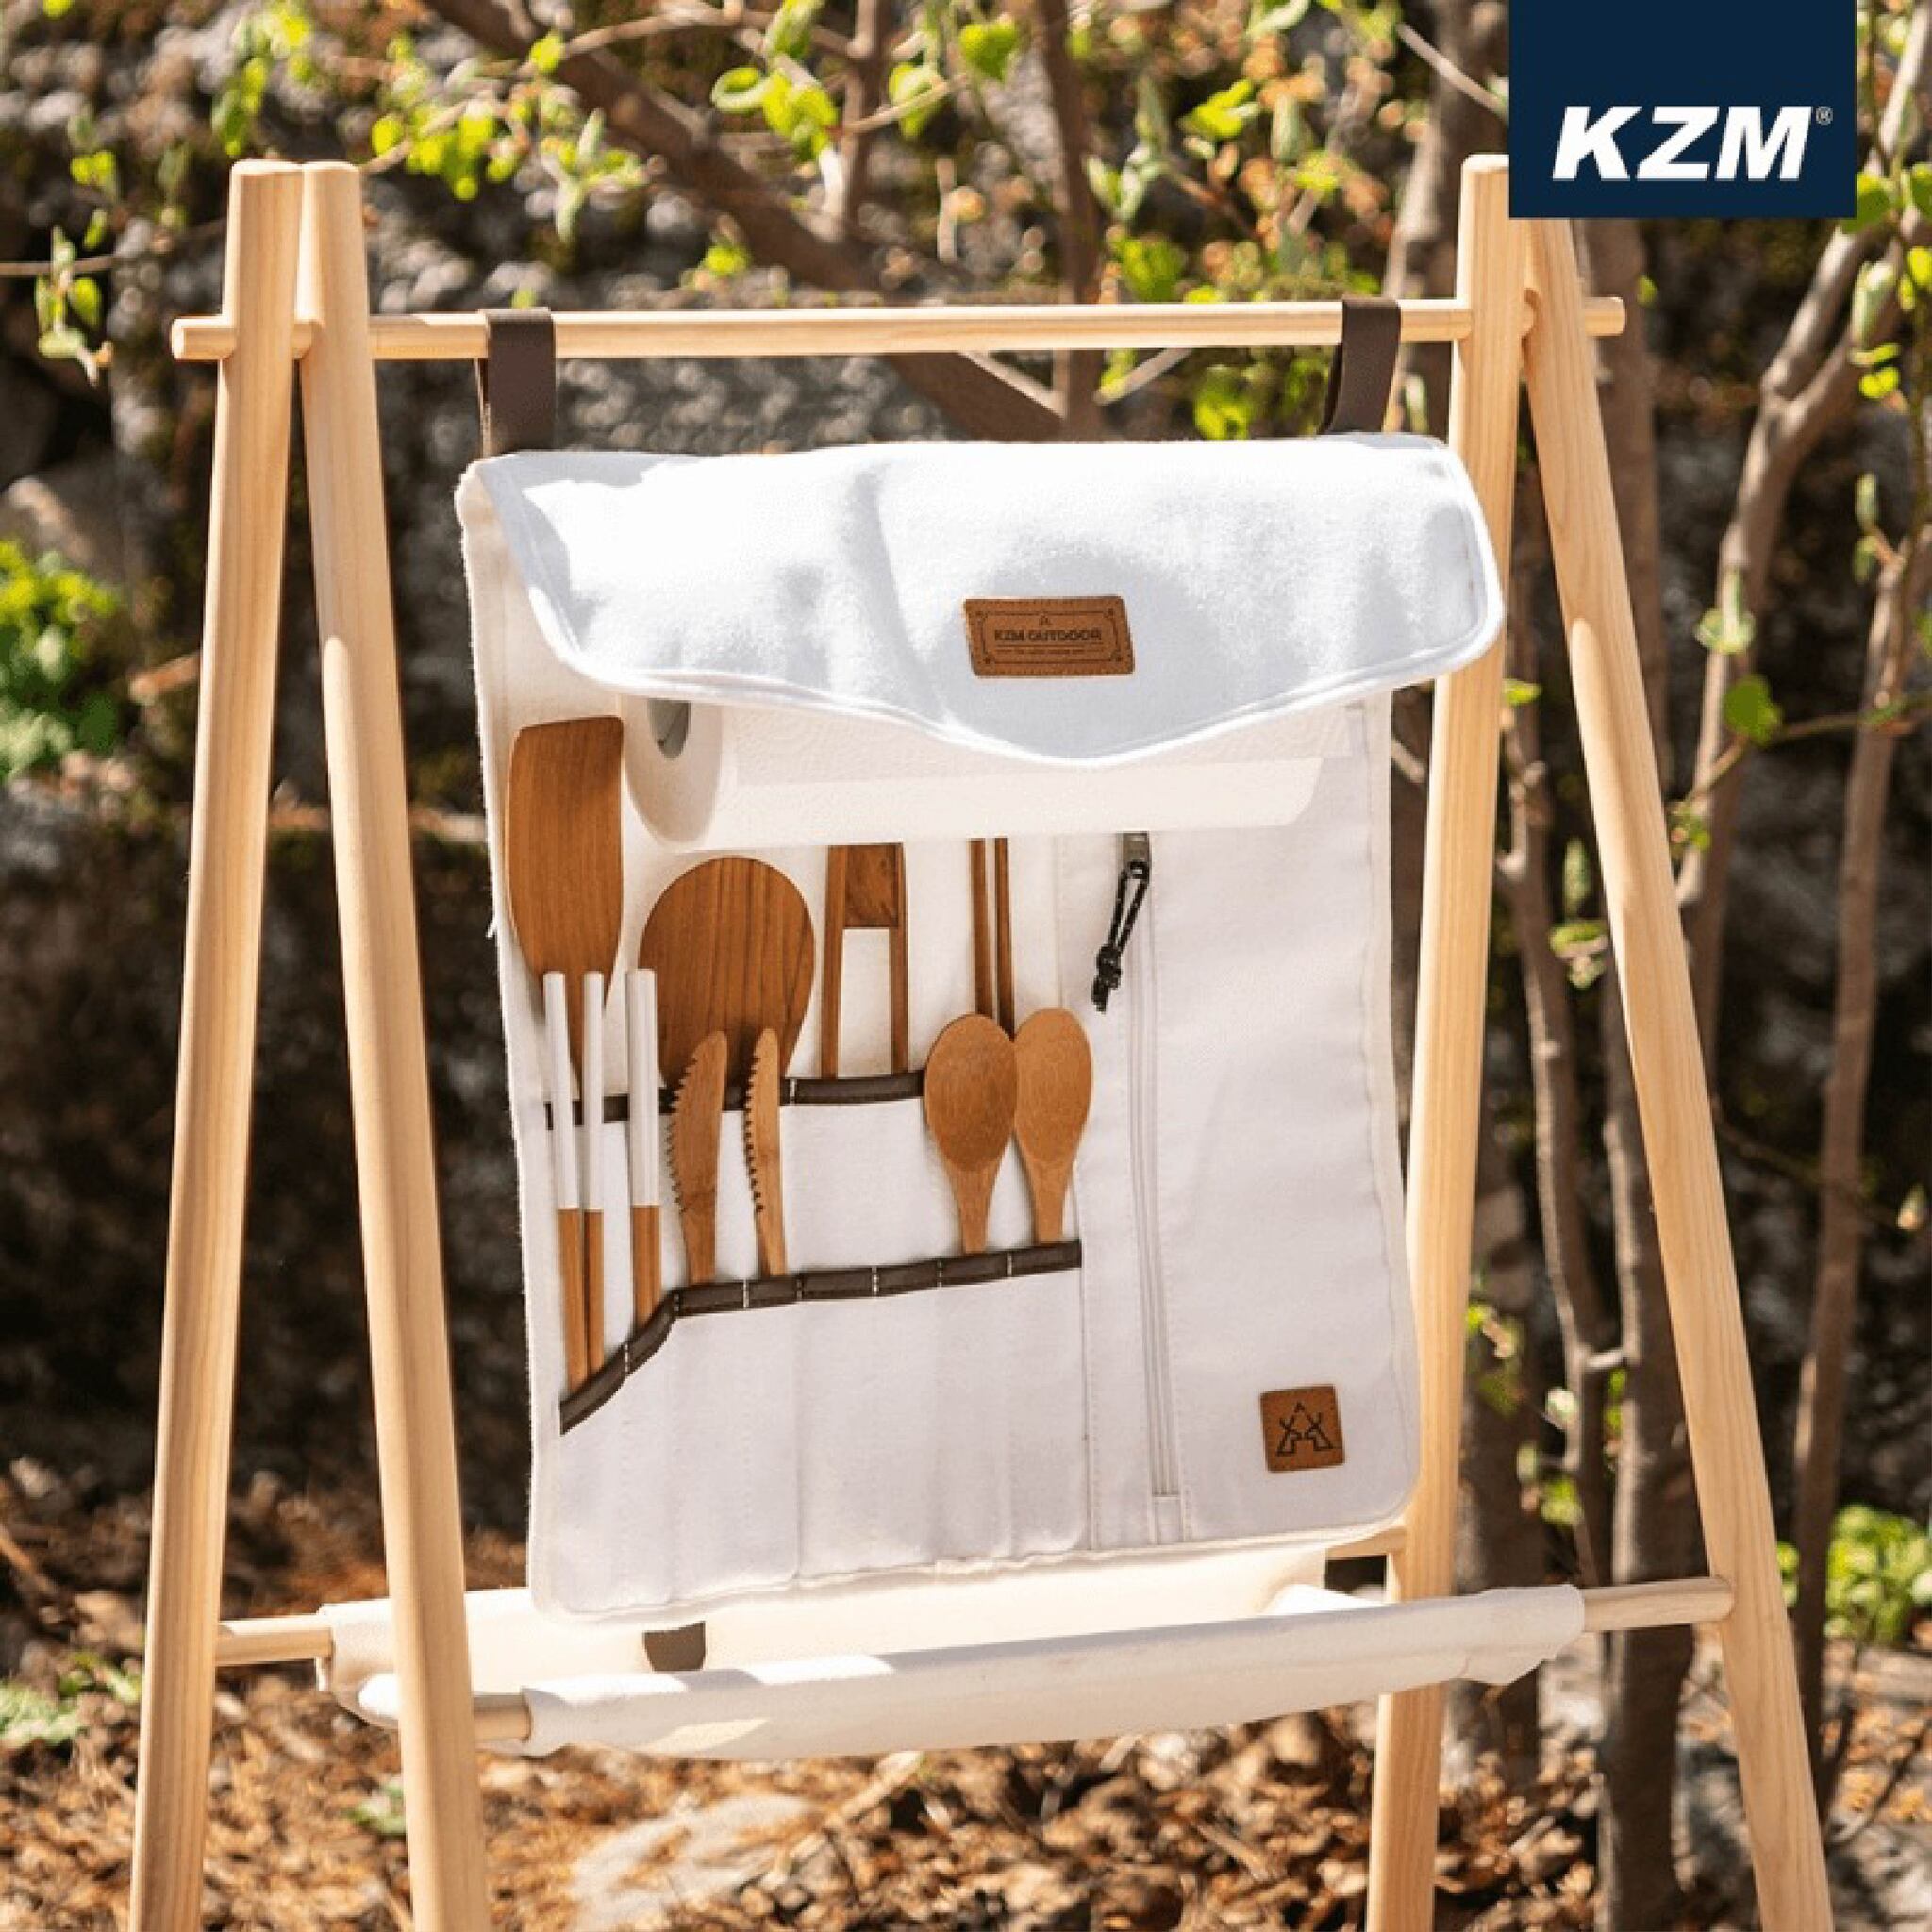 KAZMI KZM 工業風裝備收納袋18L 裝備袋收納包K23T3B06